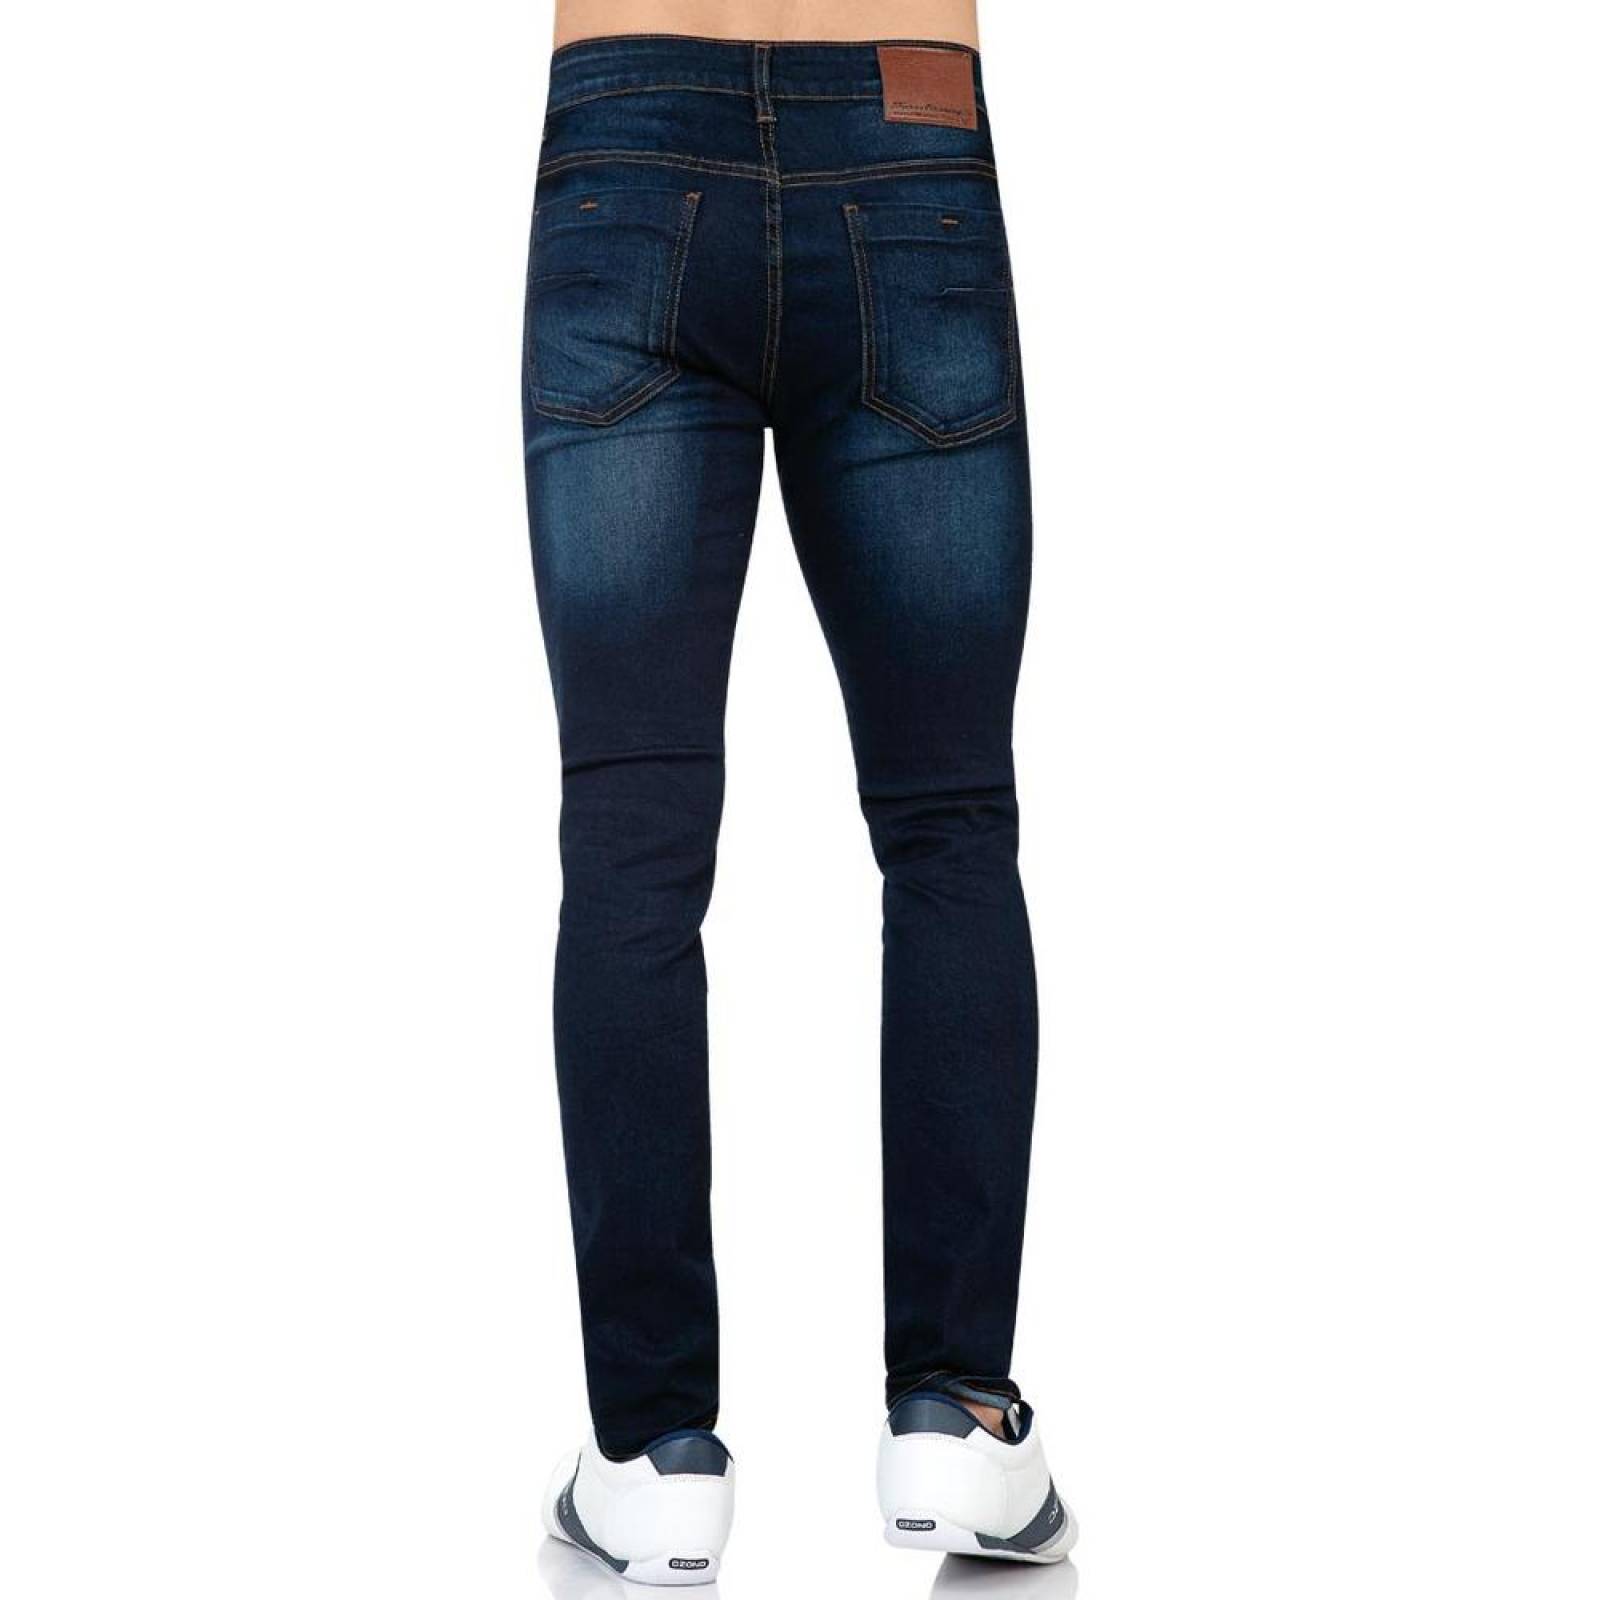 Jeans Moda Hombre Furor Indigo 62105316 Mezclilla Stretch 